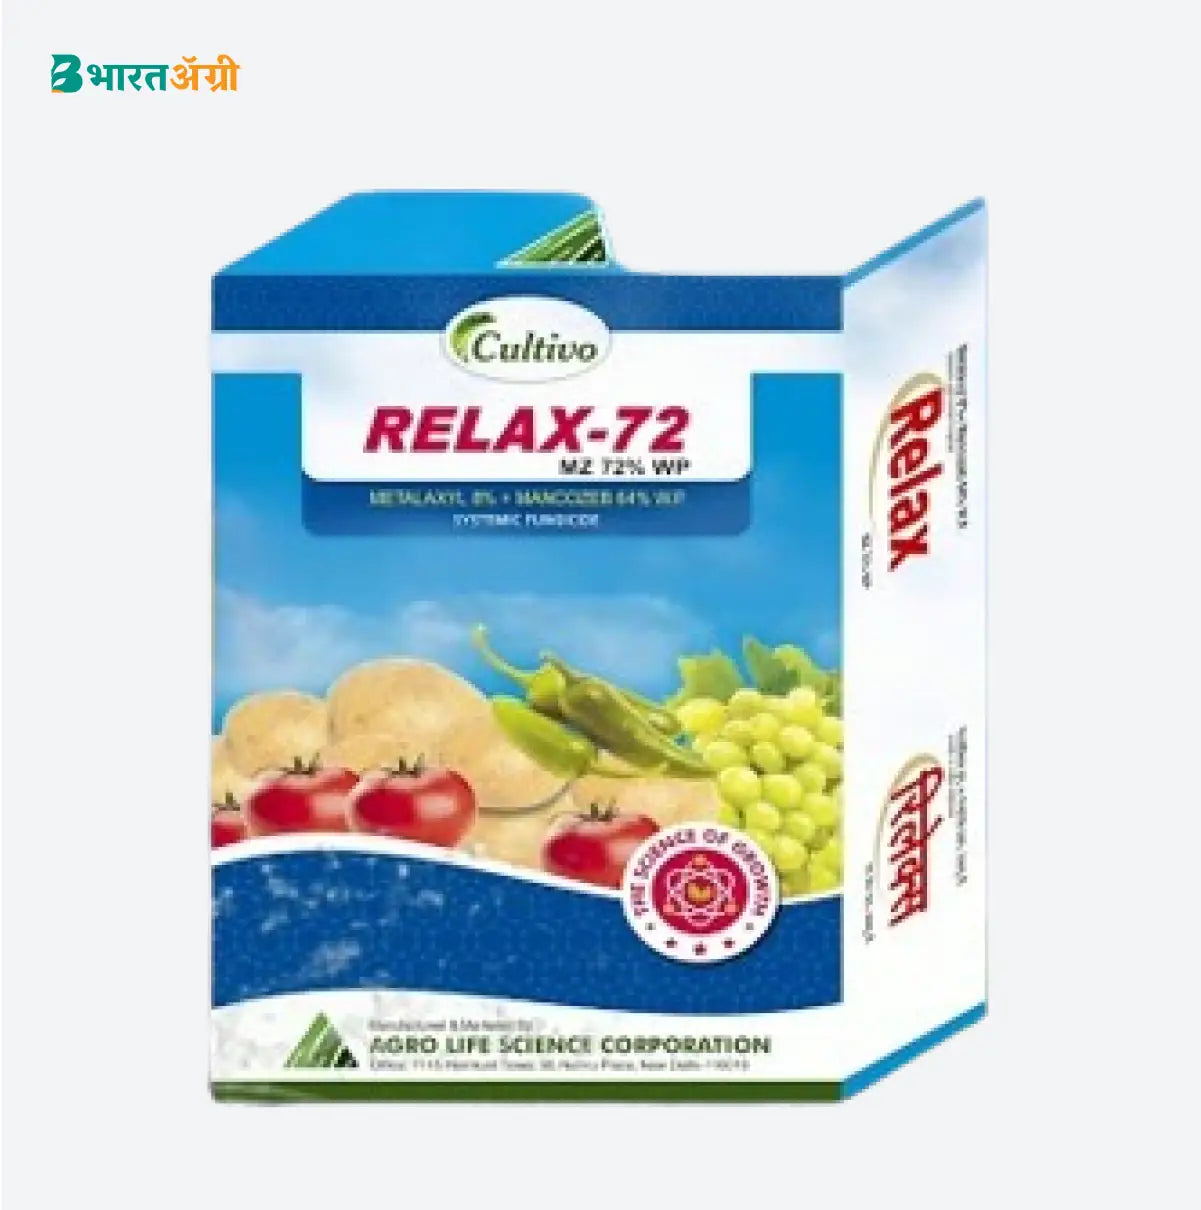 Agro Life Science Relax-72 Fungicide | BharatAgri